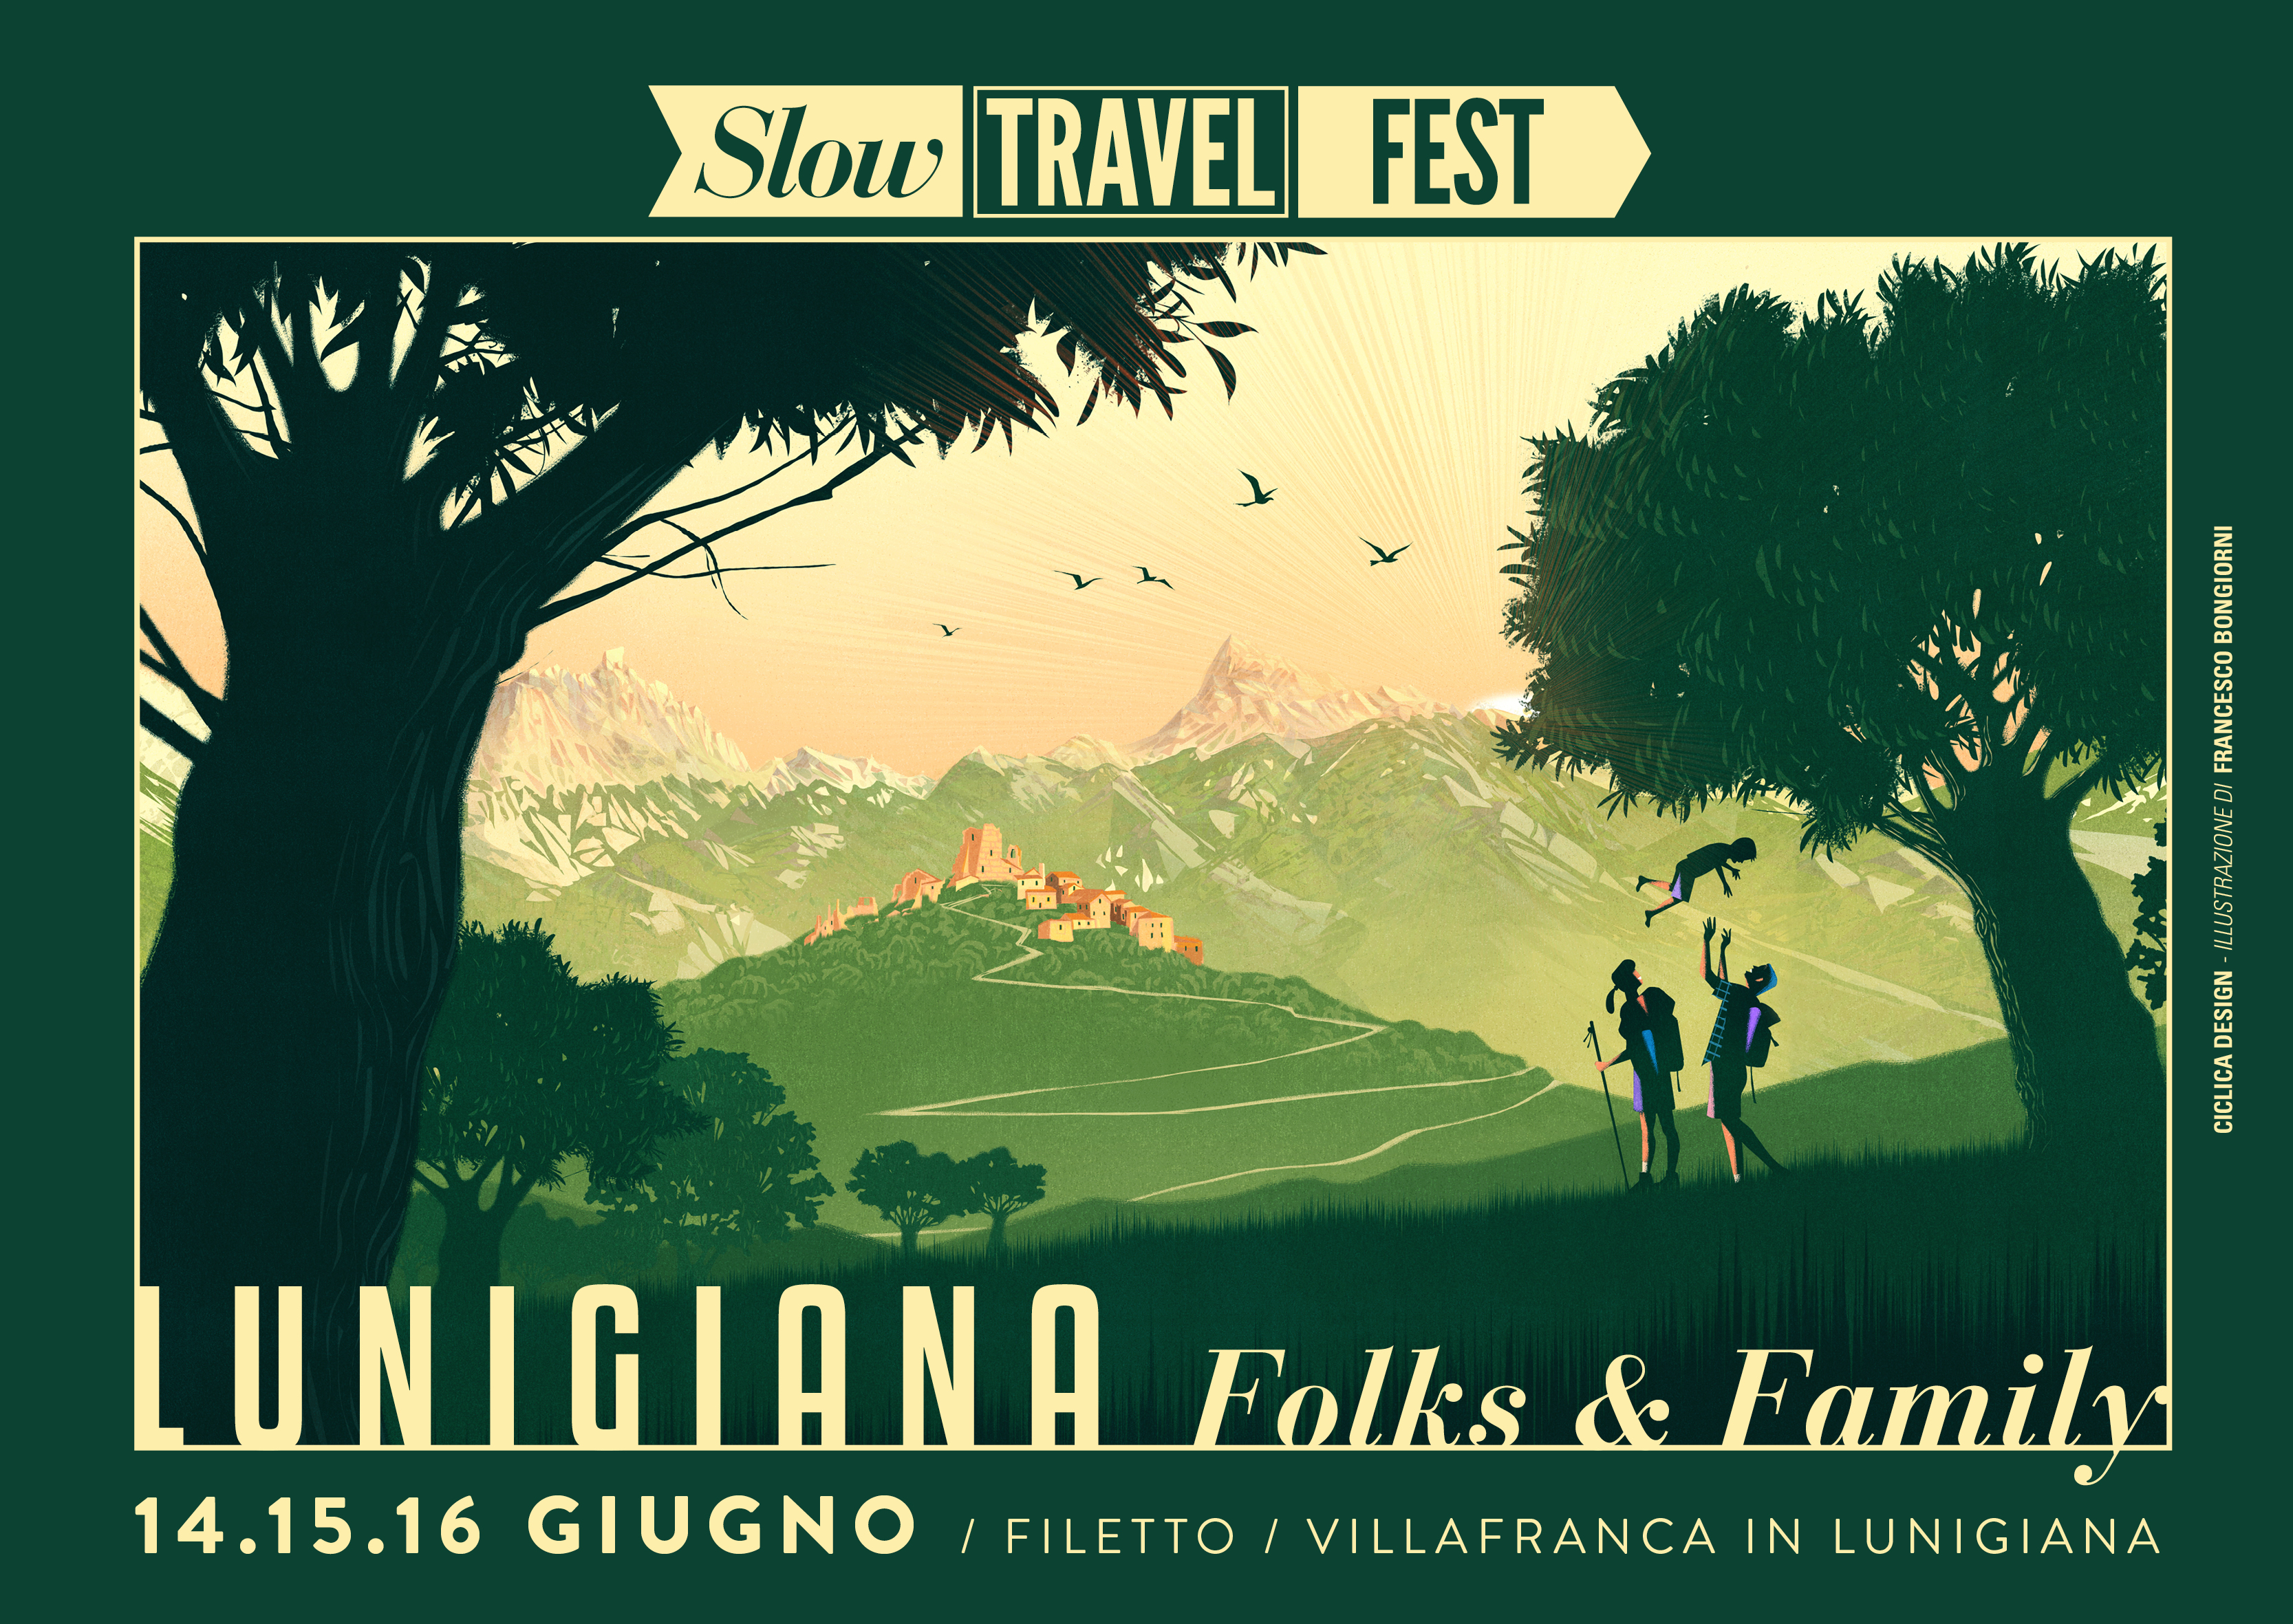 Slow Travel Fest ~ Lunigiana Folks & Family 2019